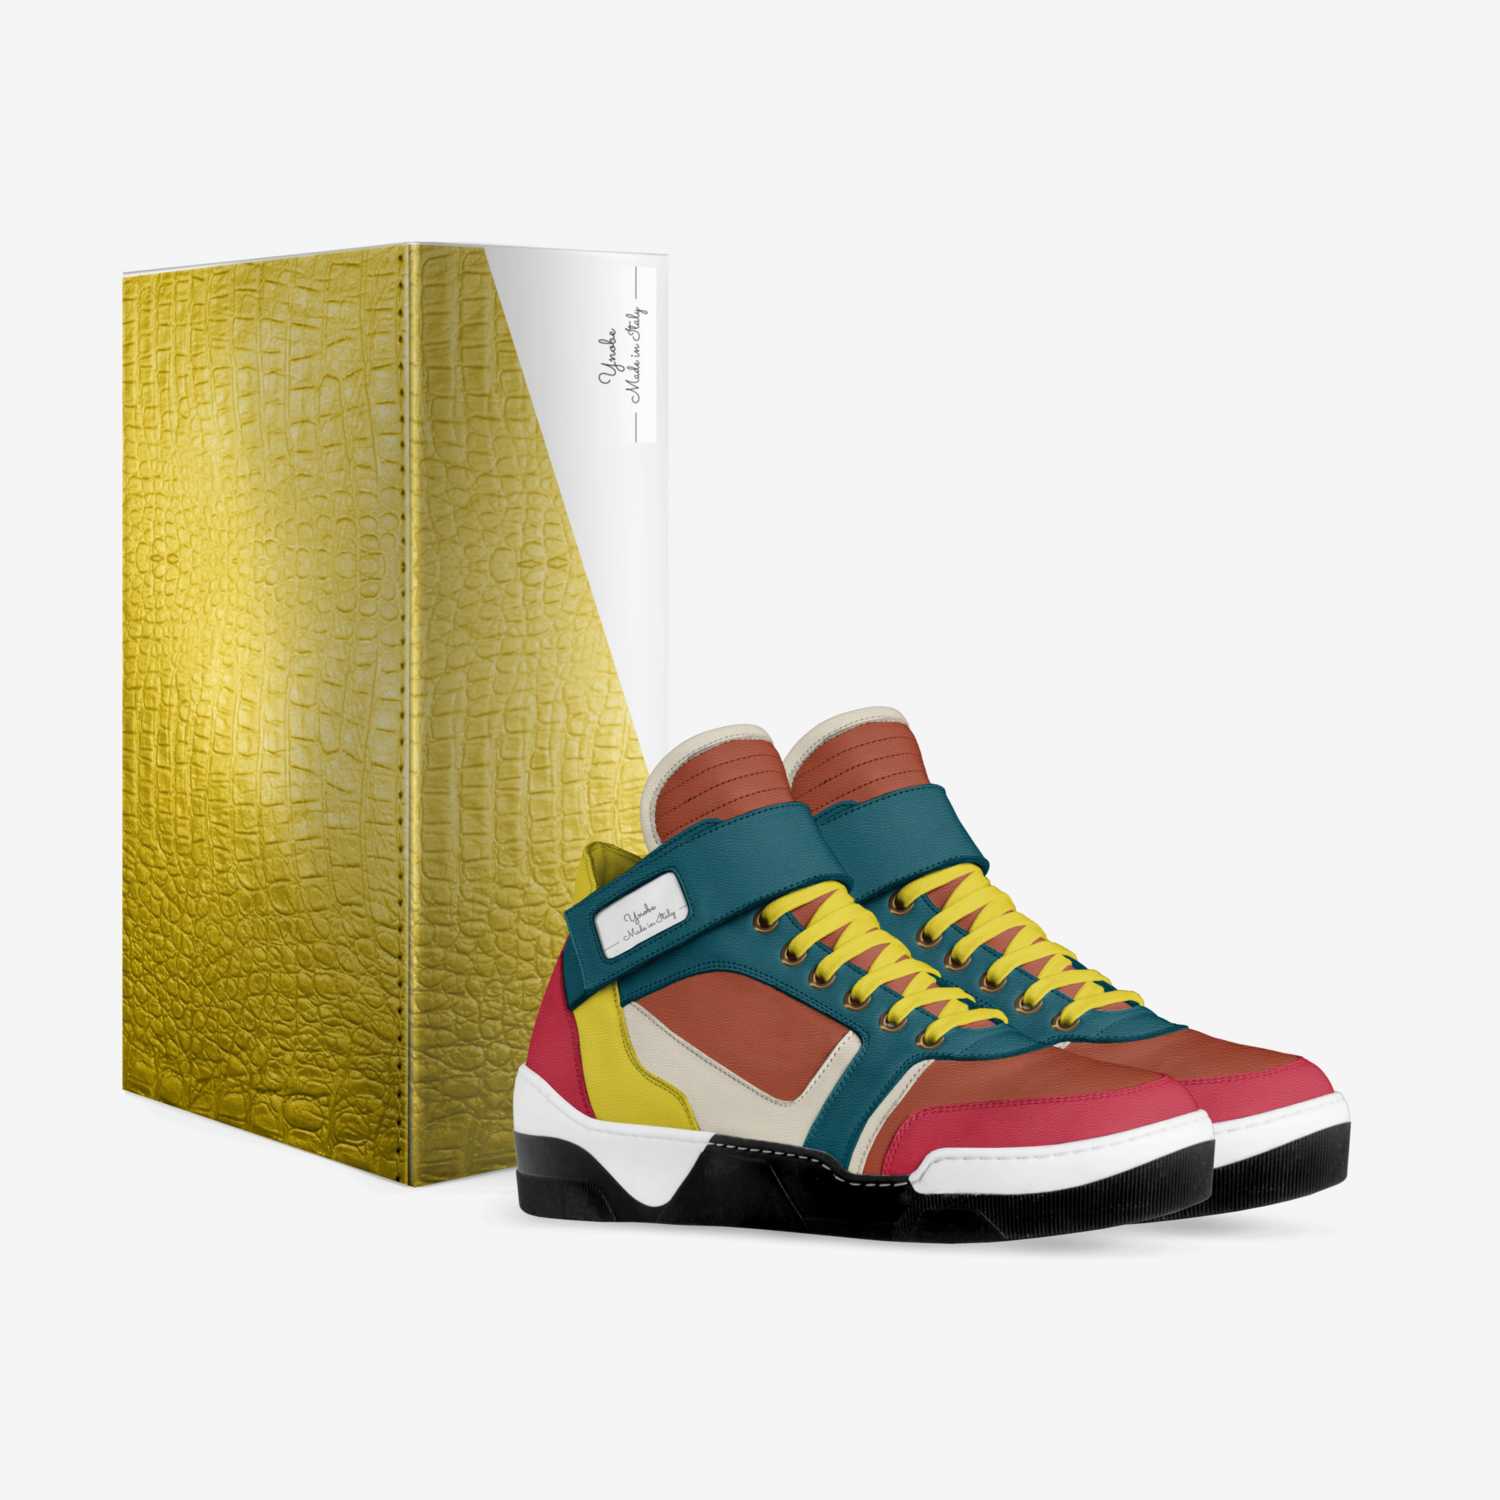 Ynobe  custom made in Italy shoes by Ebony Broady | Box view